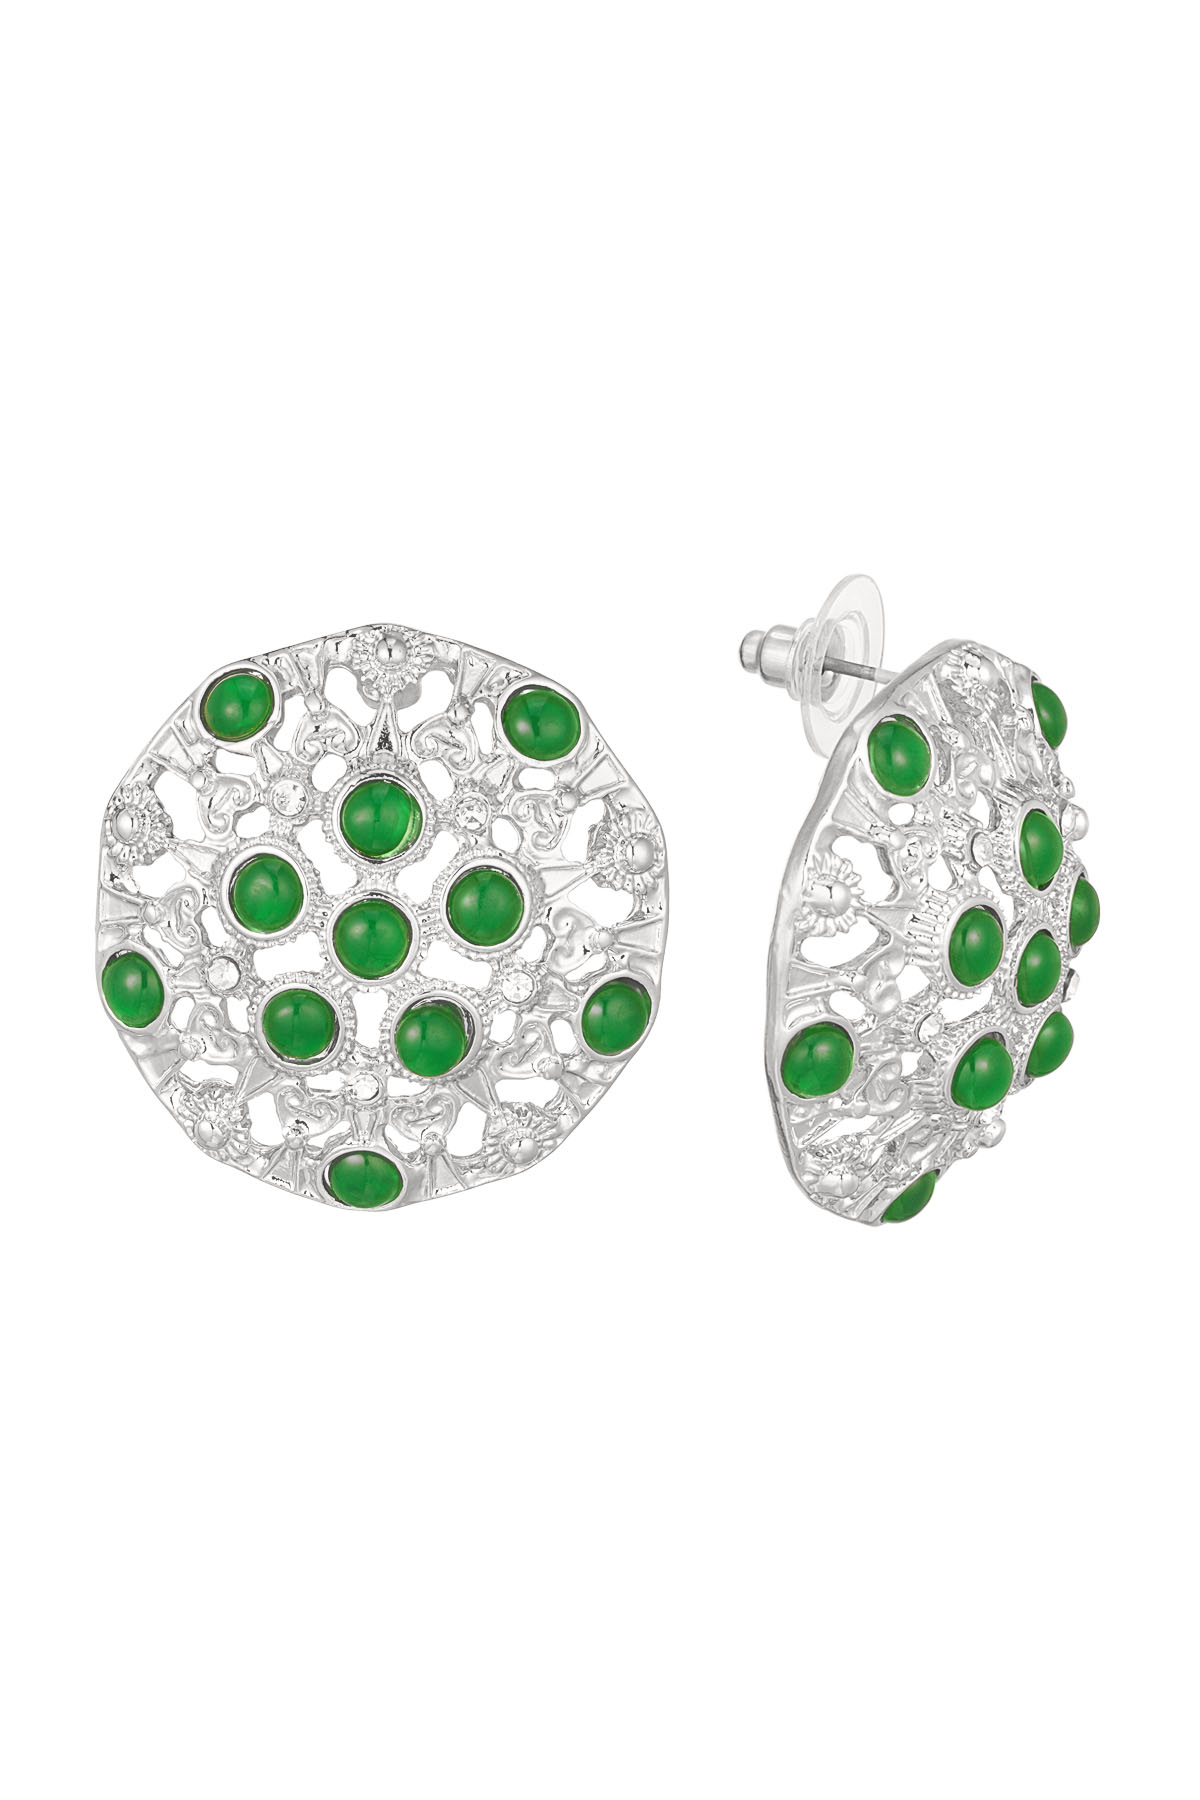 Earrings mandela with green stones - silver